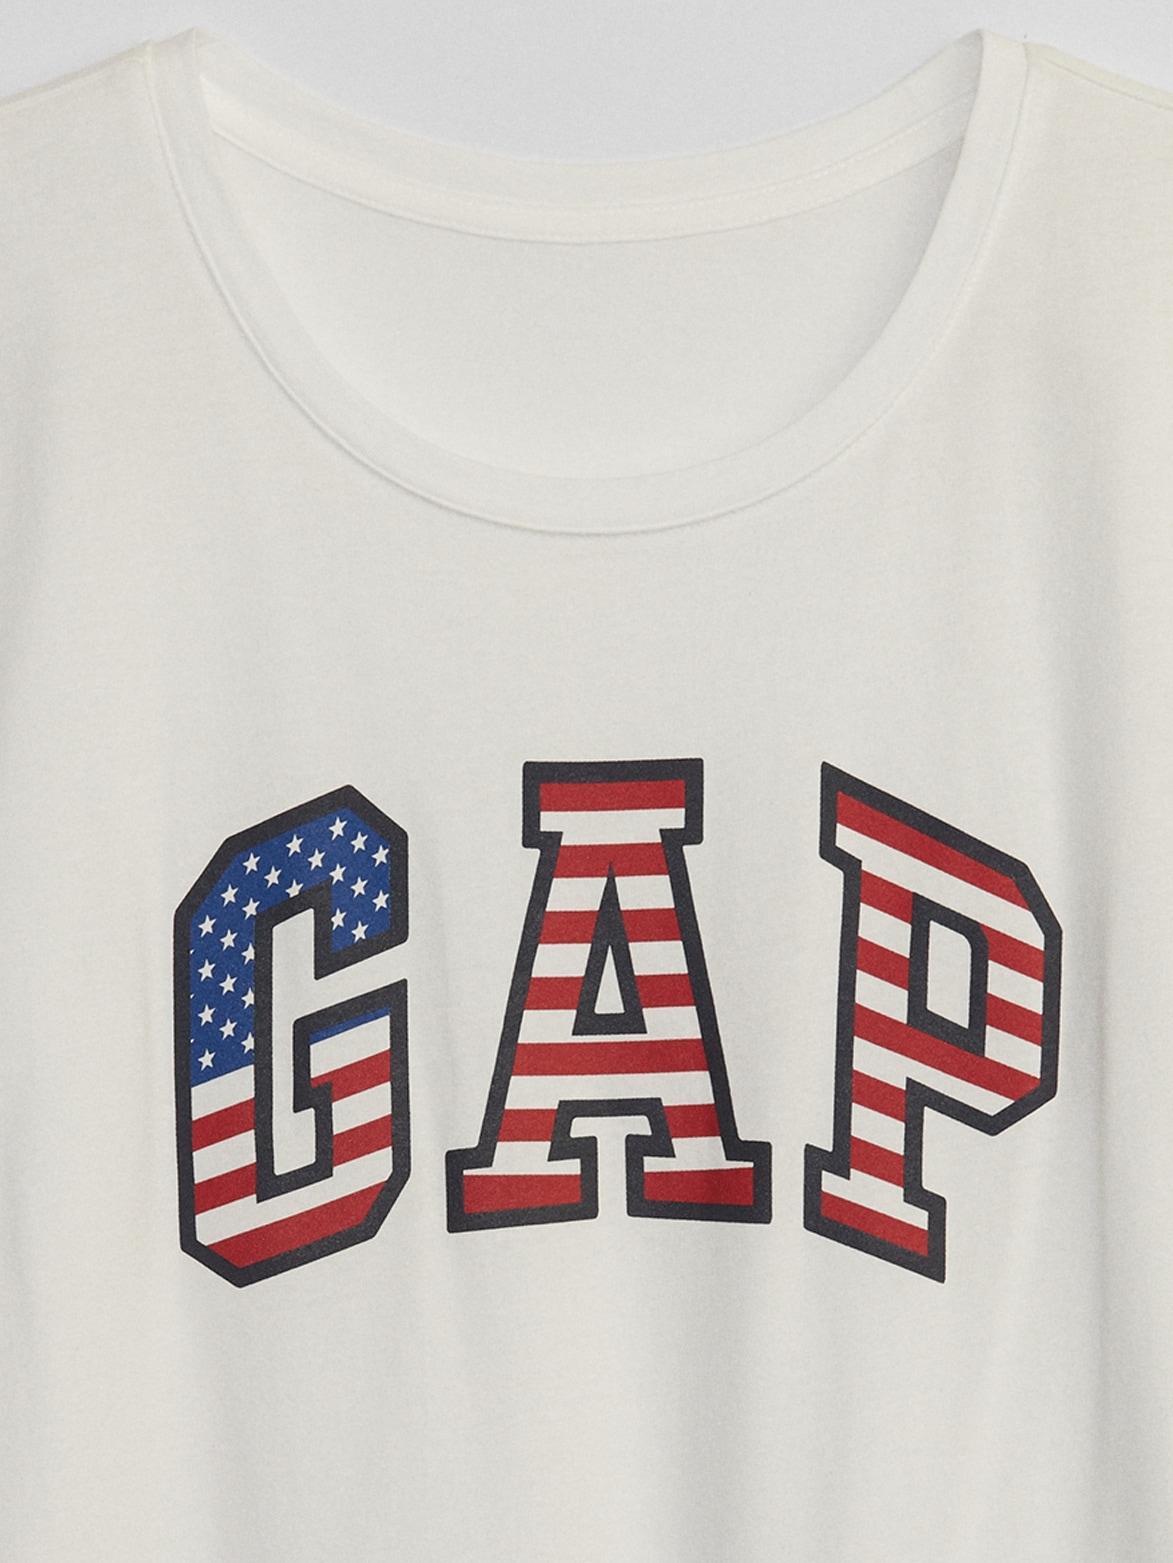 Favorite Graphic T-Shirt | Gap Factory